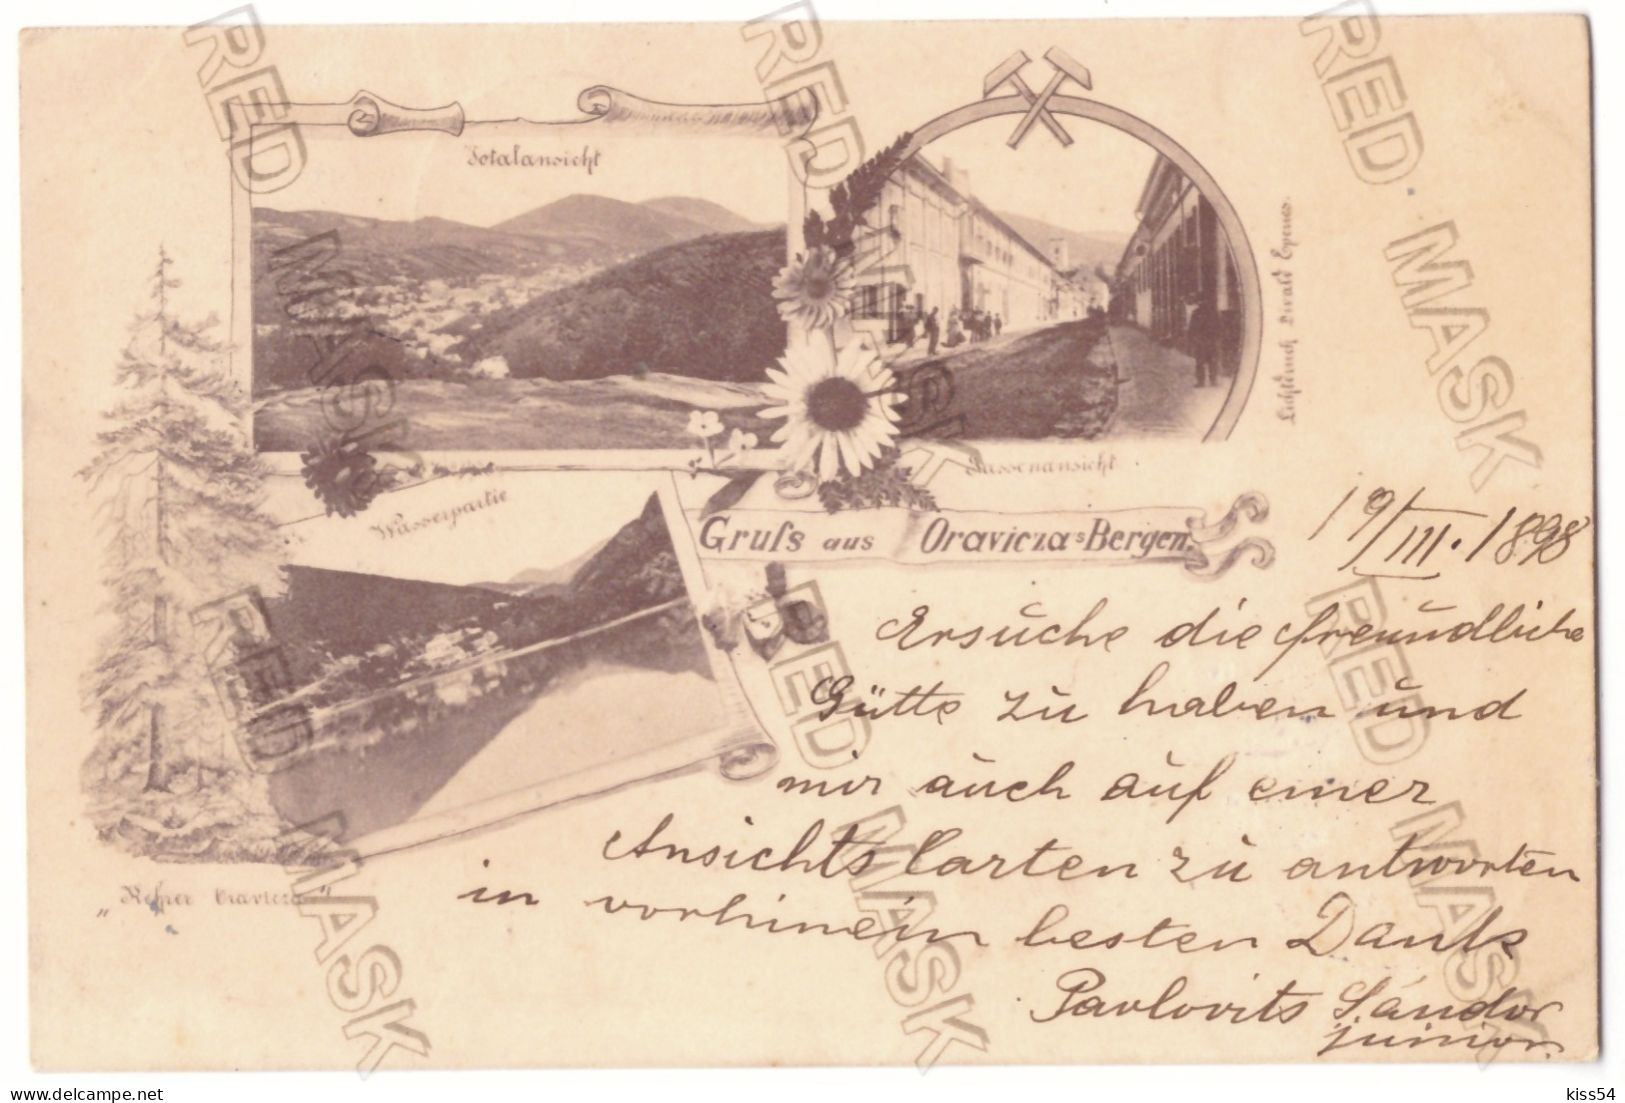 RO 91 - 25398 ORAVITA, Caras Severin, Litho, Romania - Old Postcard - Used - 1898 - Roumanie